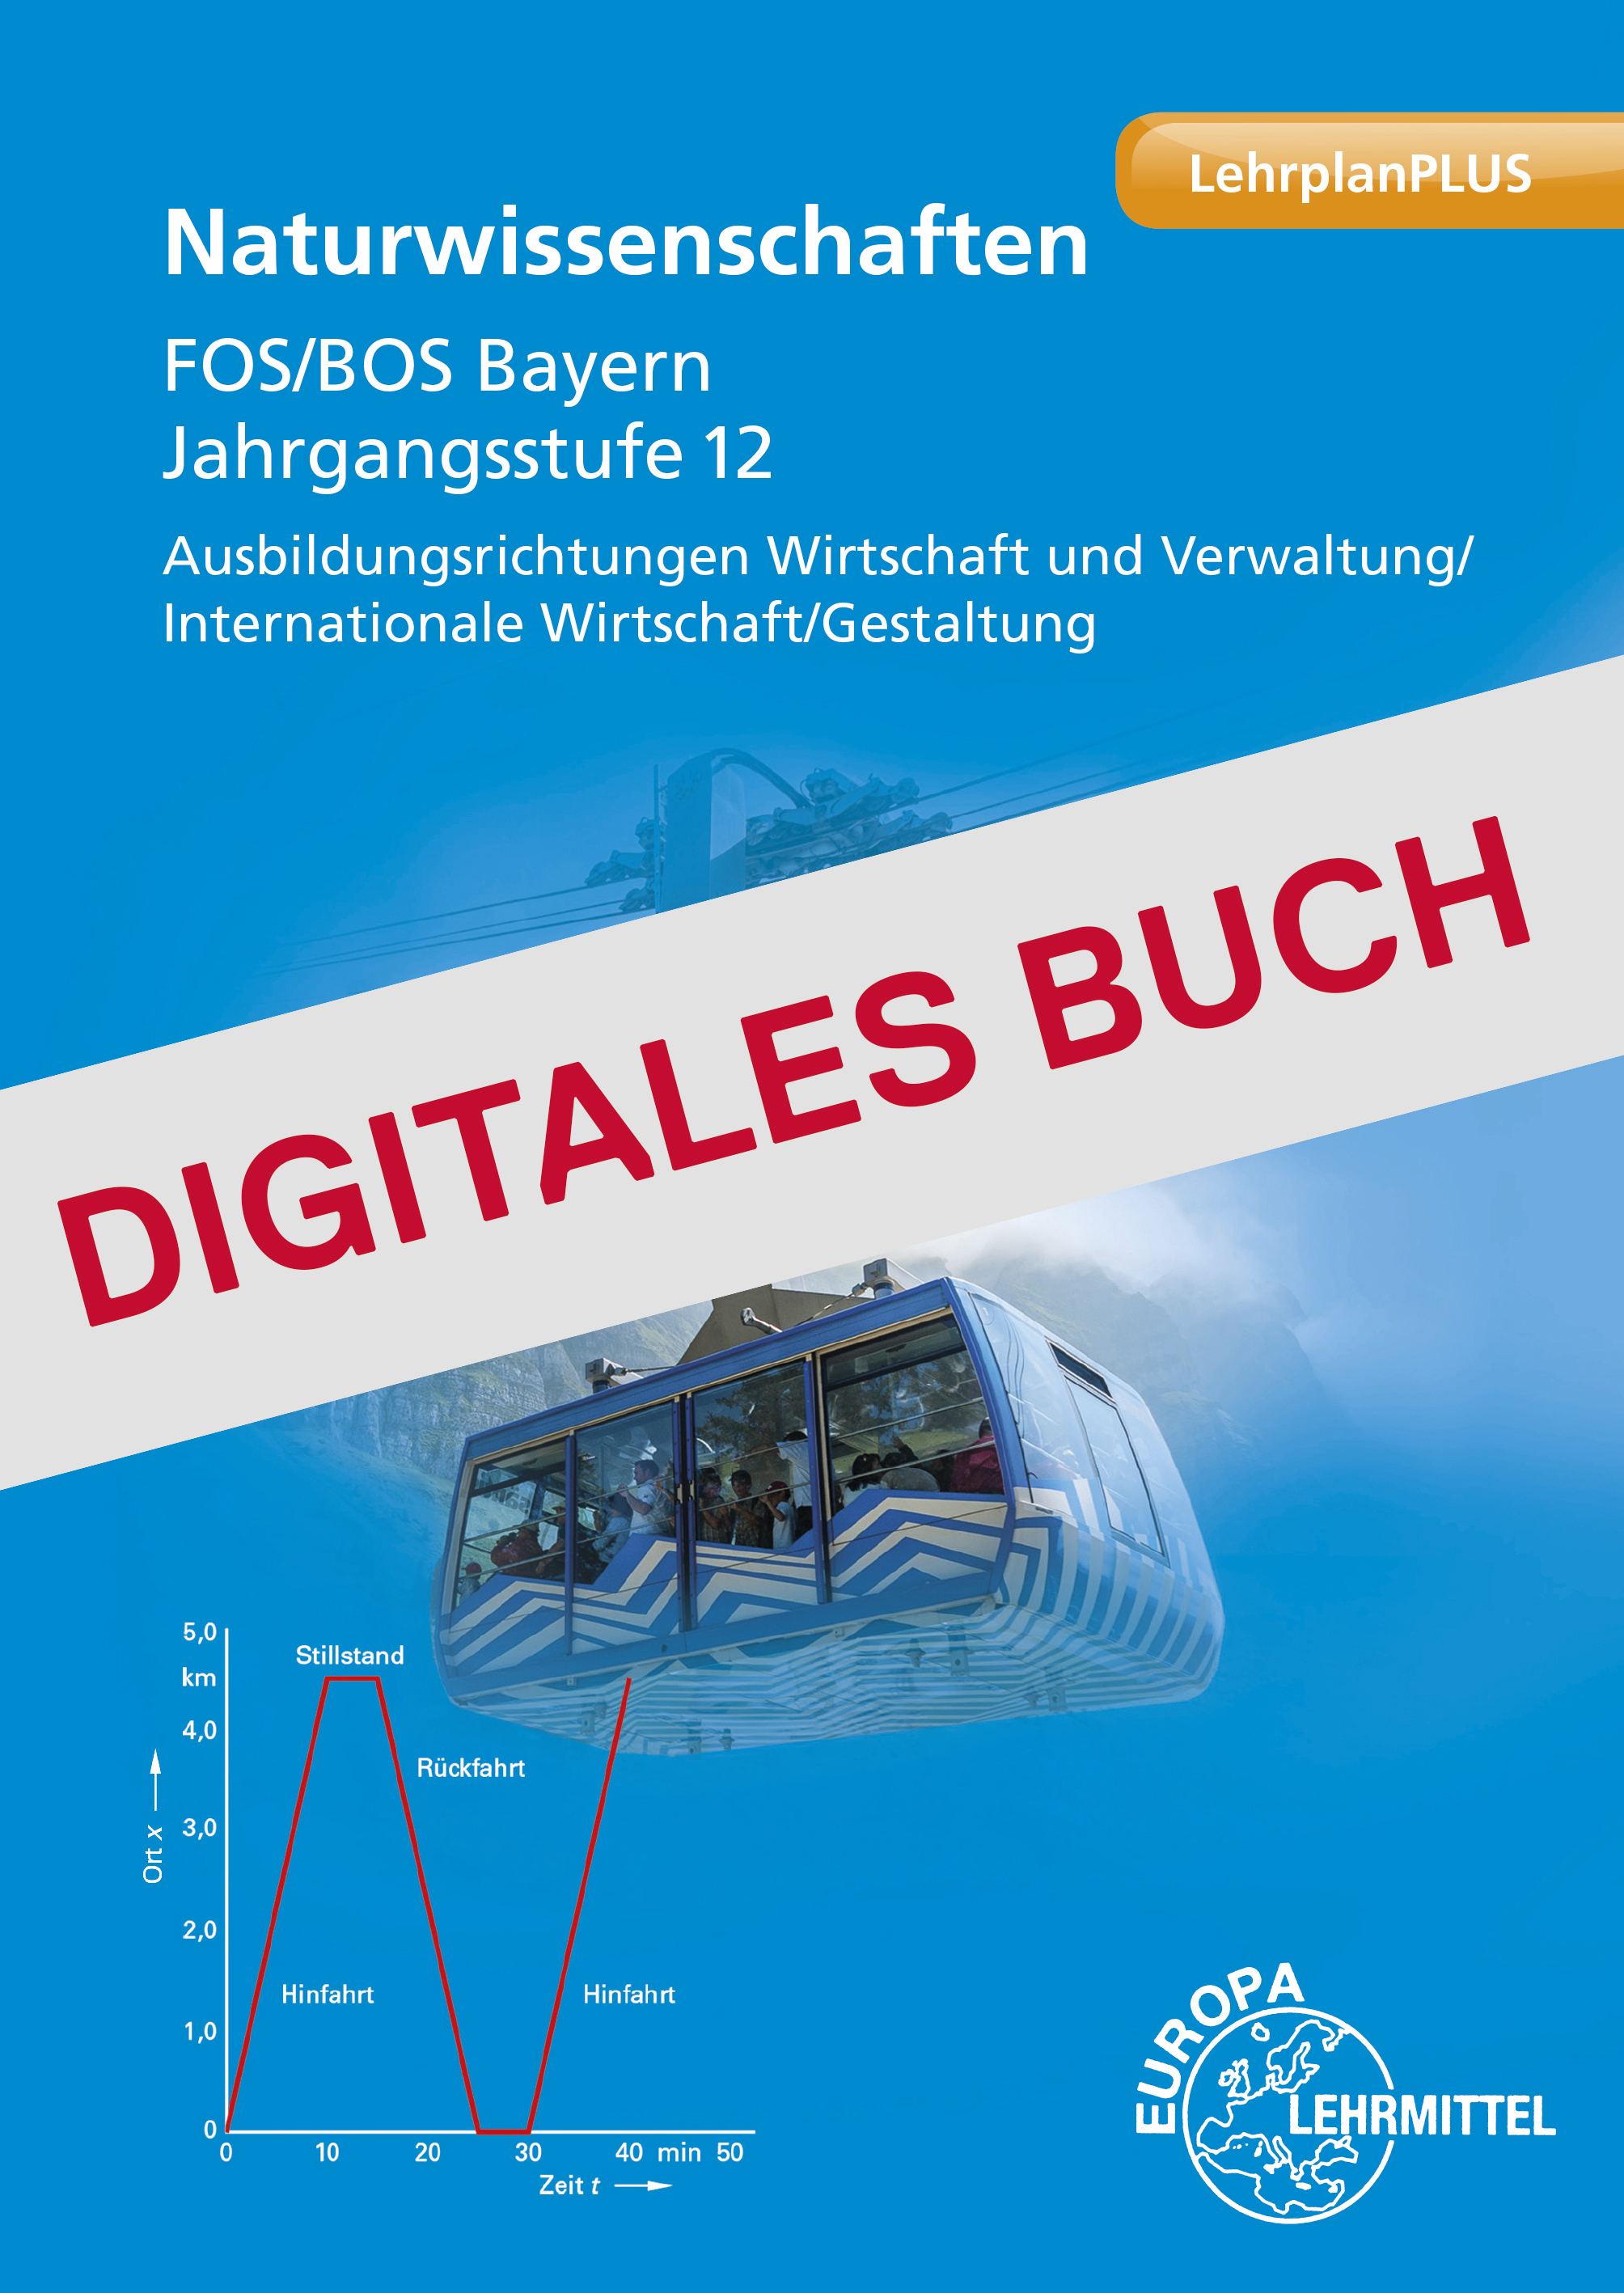 Naturwissenschaften FOS/BOS Bayern Jgst. 12 - Digitales Buch